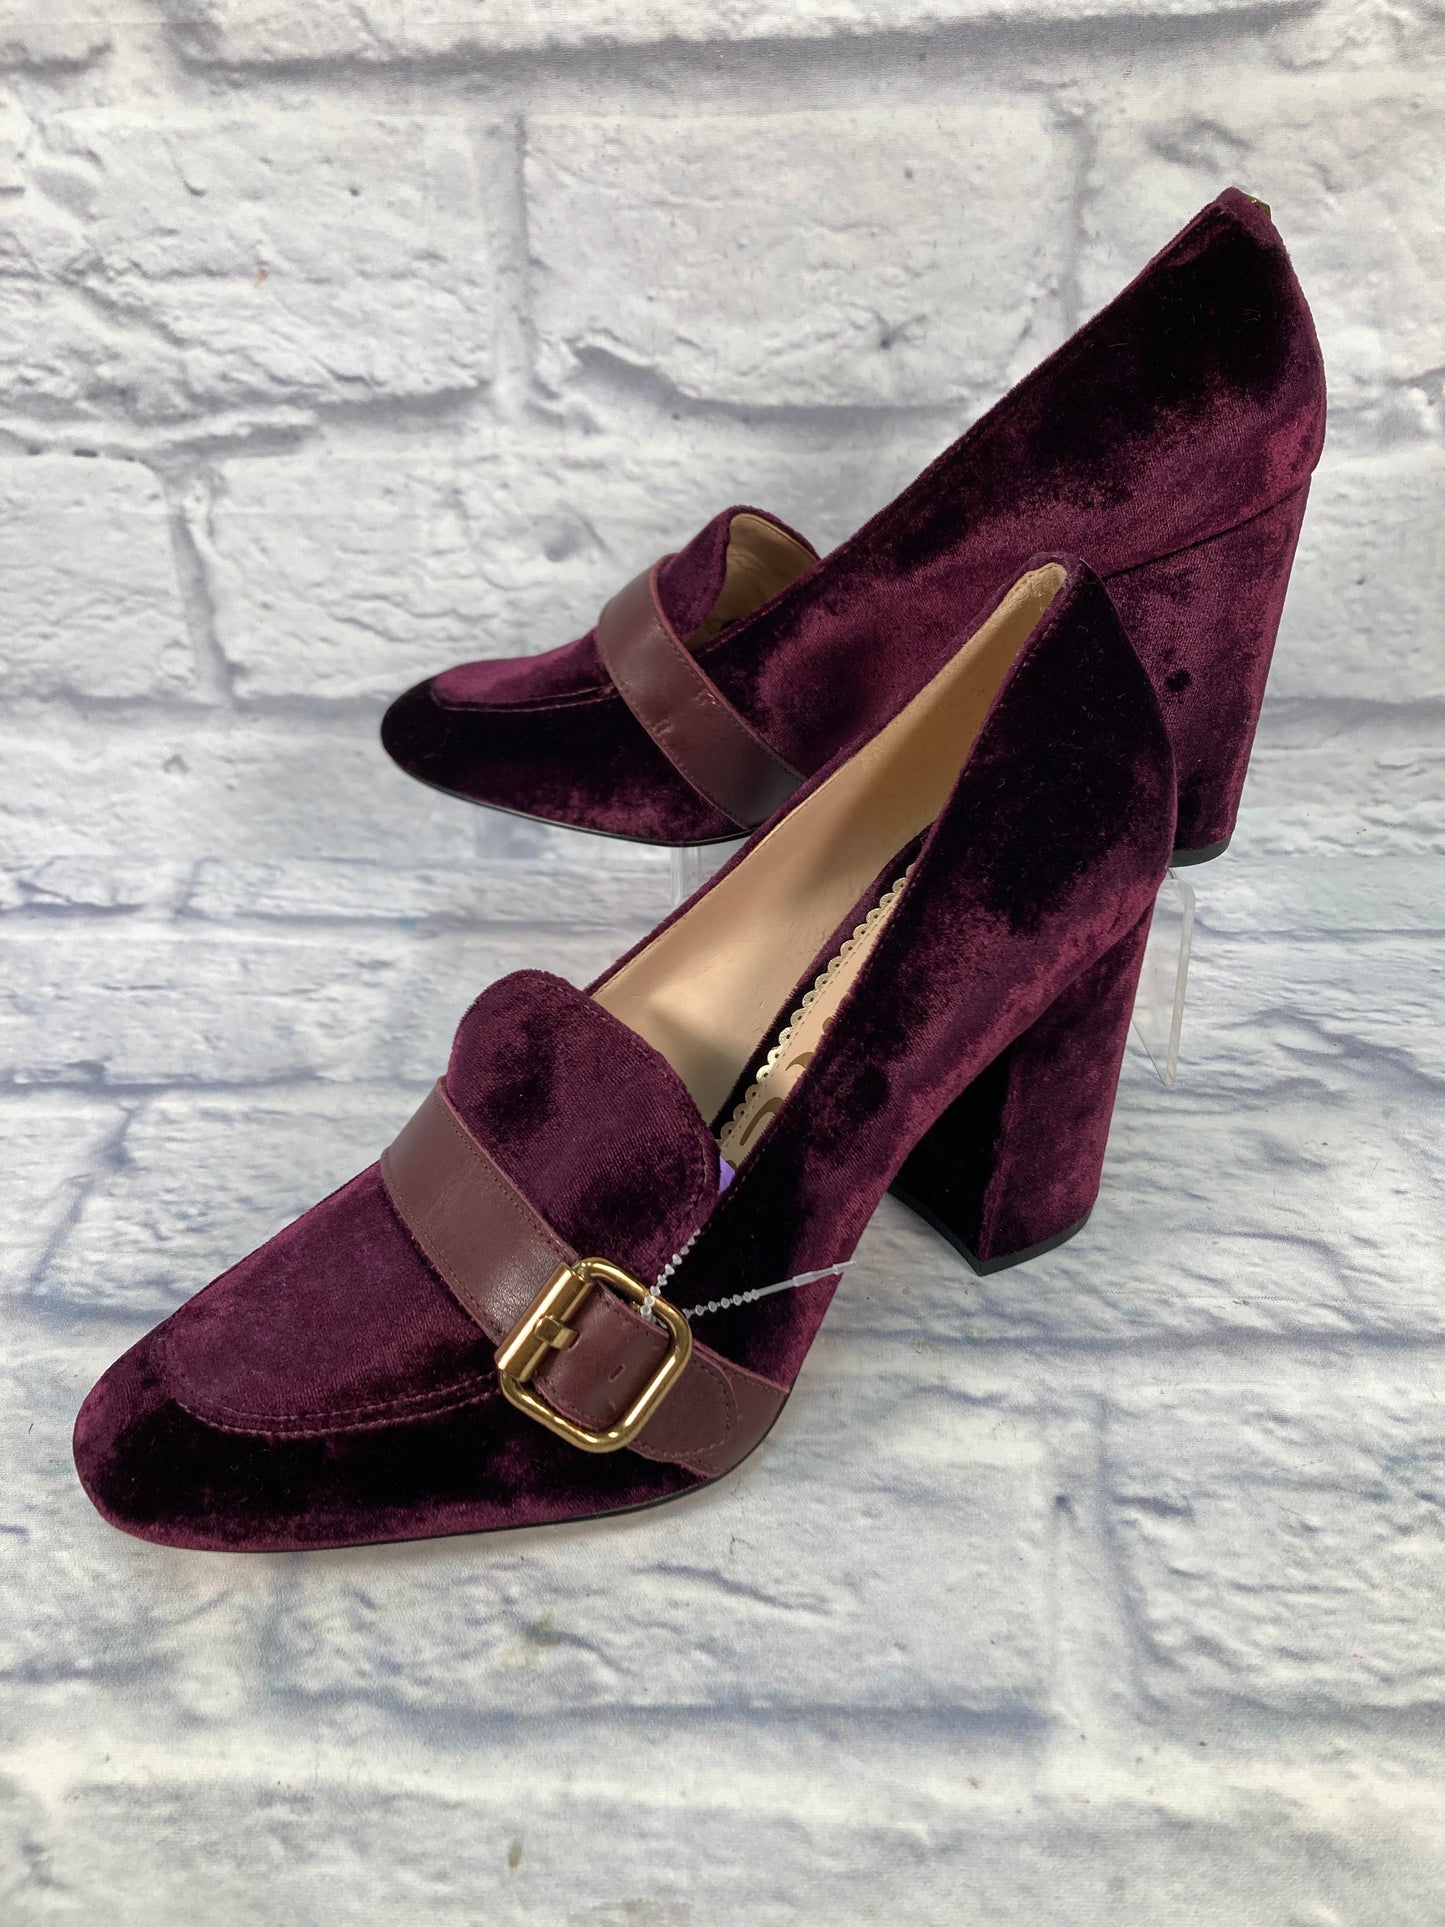 Purple Shoes Heels Block Sam Edelman, Size 9